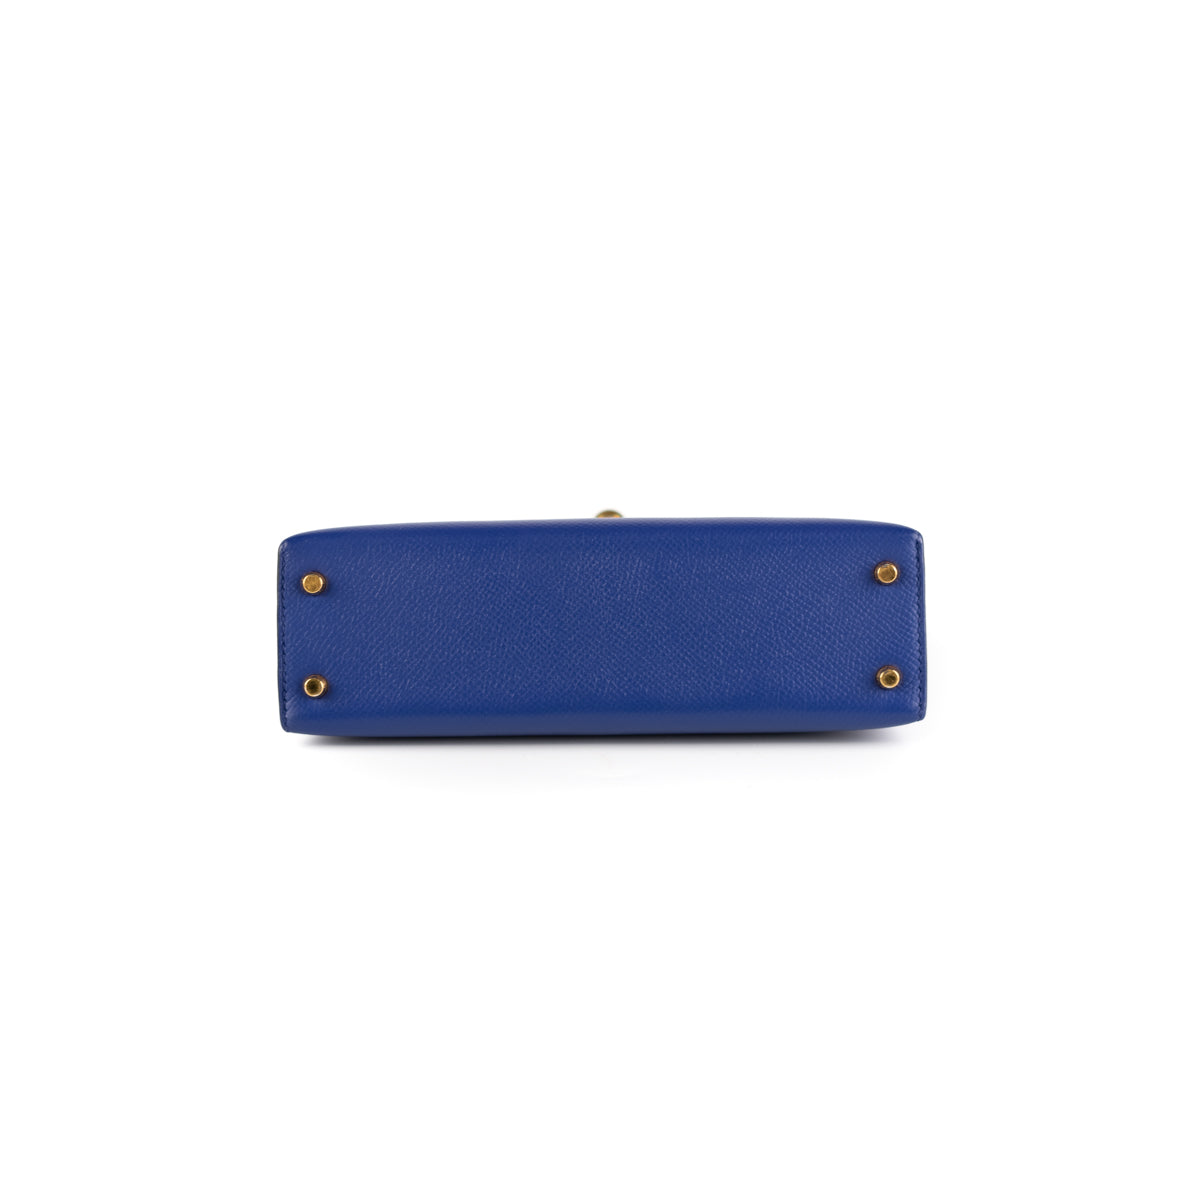 Mini kelly 20 blue color gold hardware epsom leather — Styleout